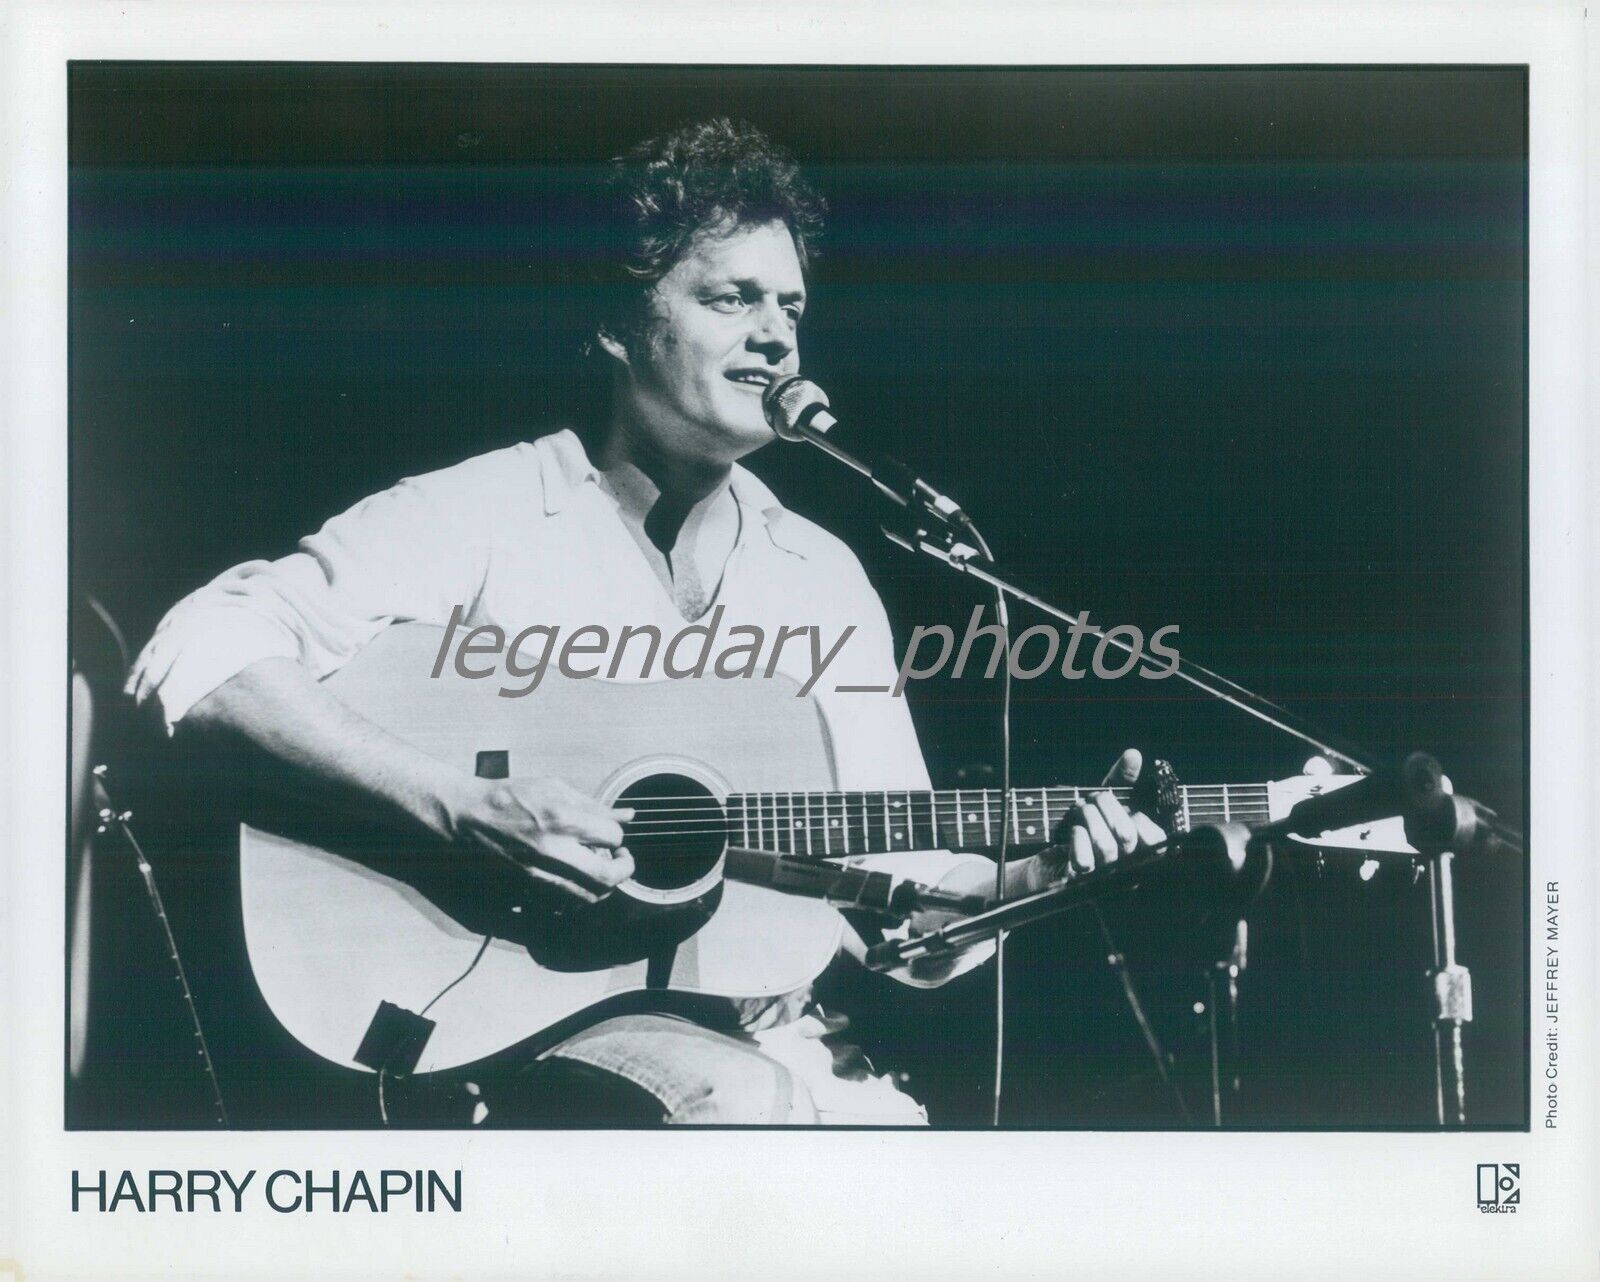 1978 Musician Harry Chapin During Performance Original News Service Photo